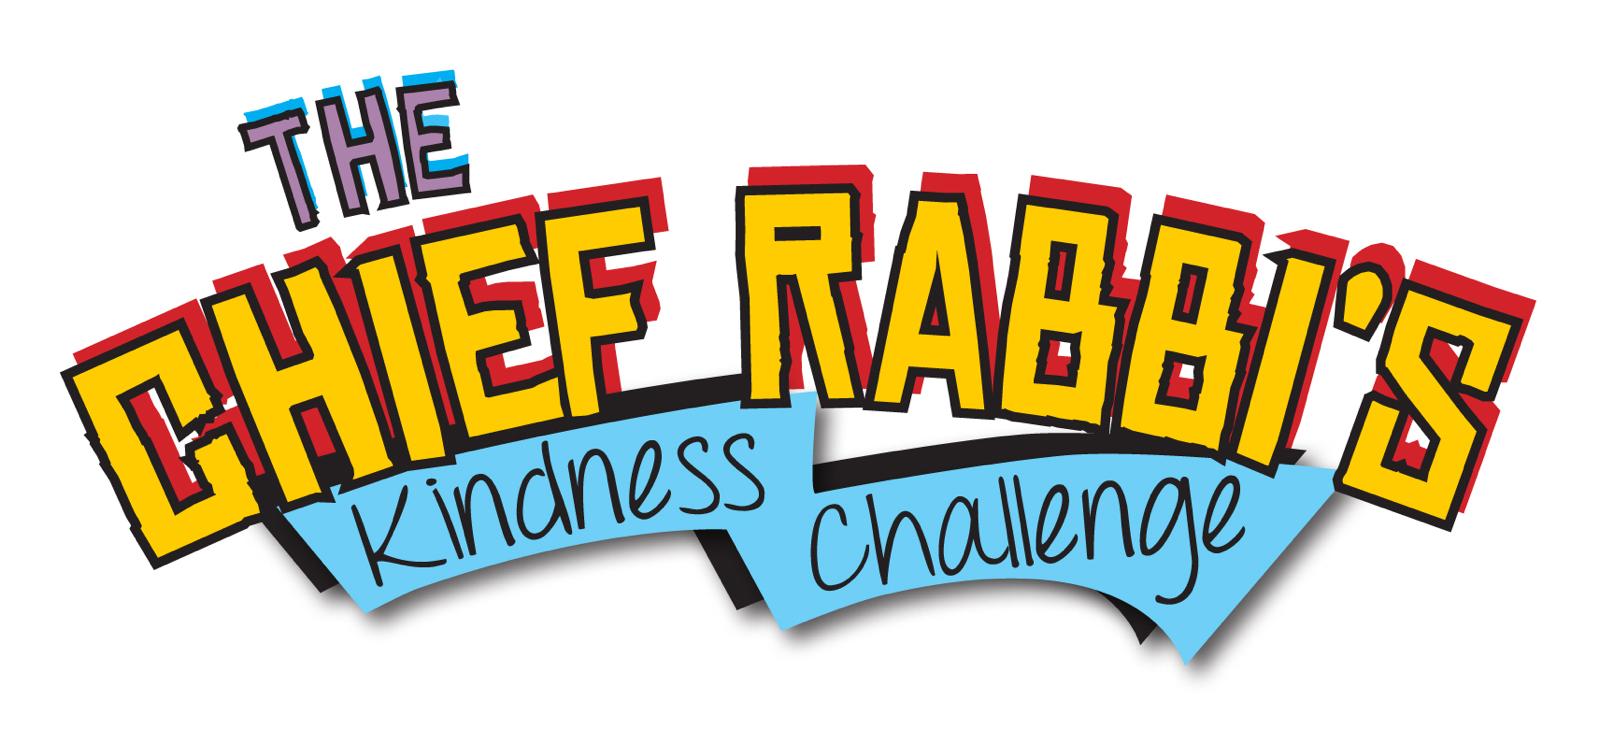 Chief Rabbi Challenge